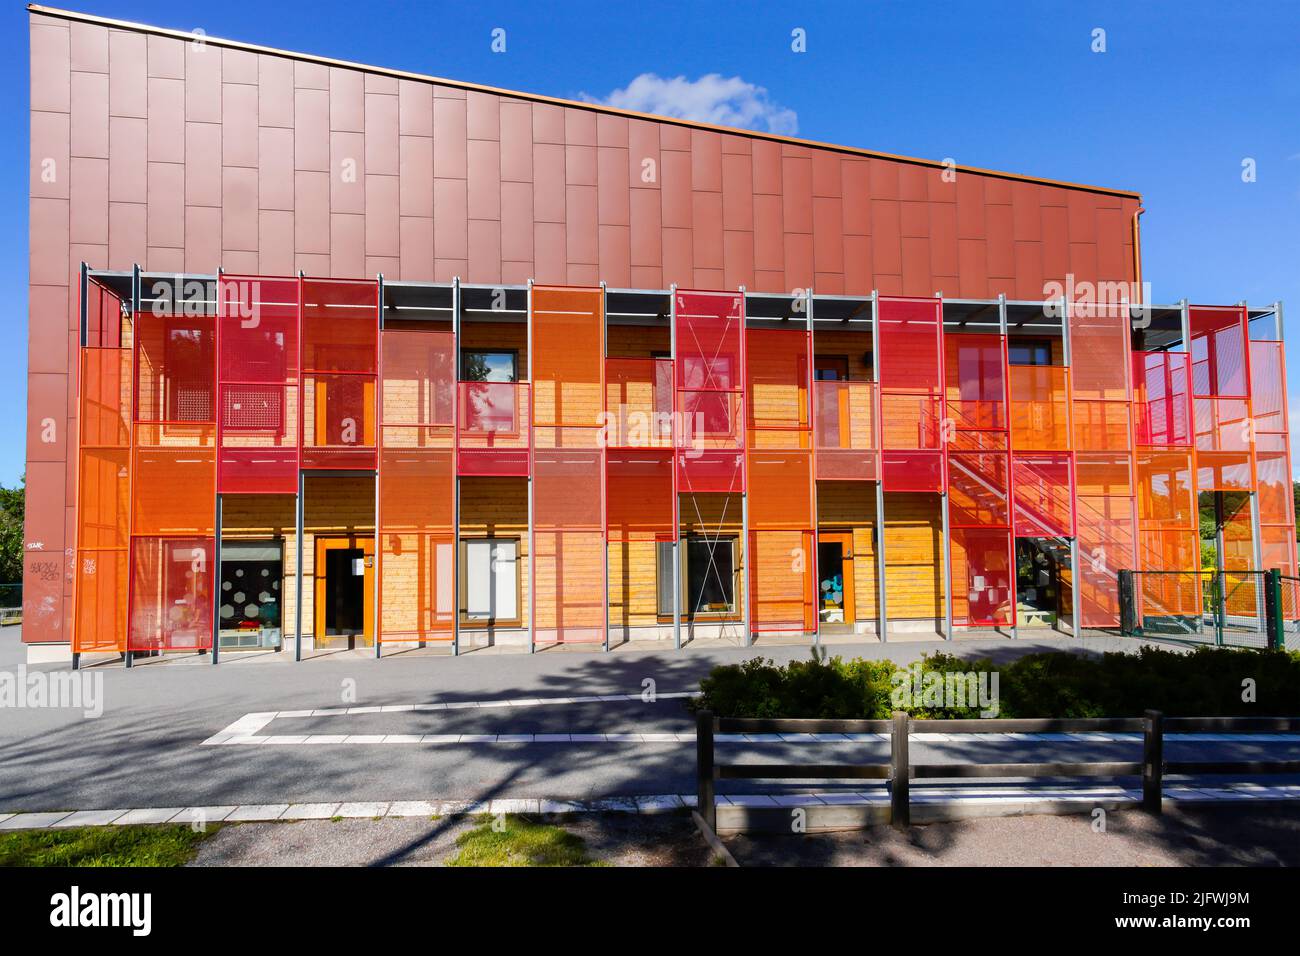 Colorful elementary school building in Ursvik (Ursvikskolan) in Sundbyberg, Sweden. Designed by Marge Architects. Stock Photo